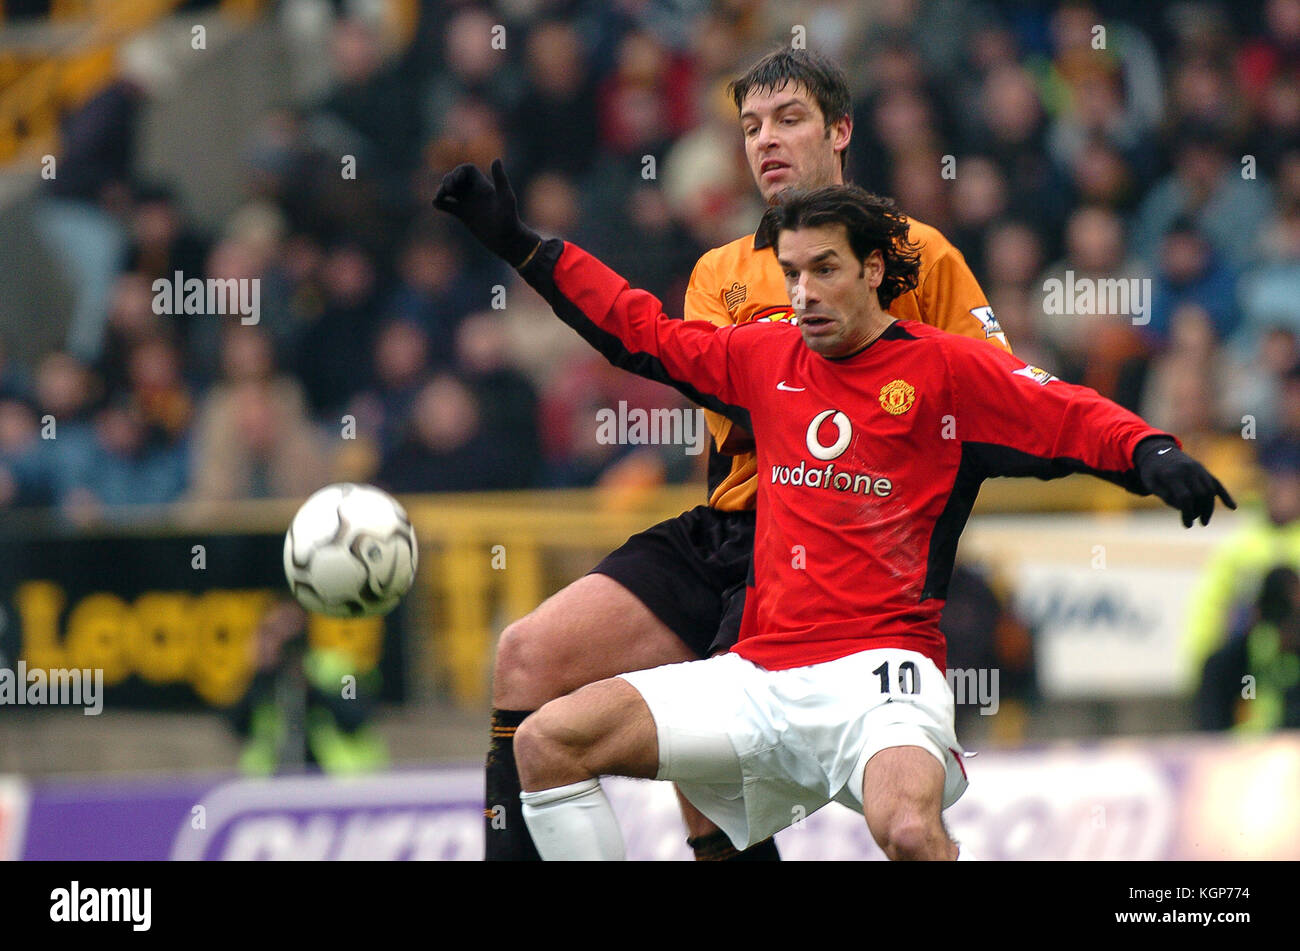 Footballer Ruud Van Nistelrooy Wolverhampton Wanderers v Manchester United 17 January 2004 Stock Photo